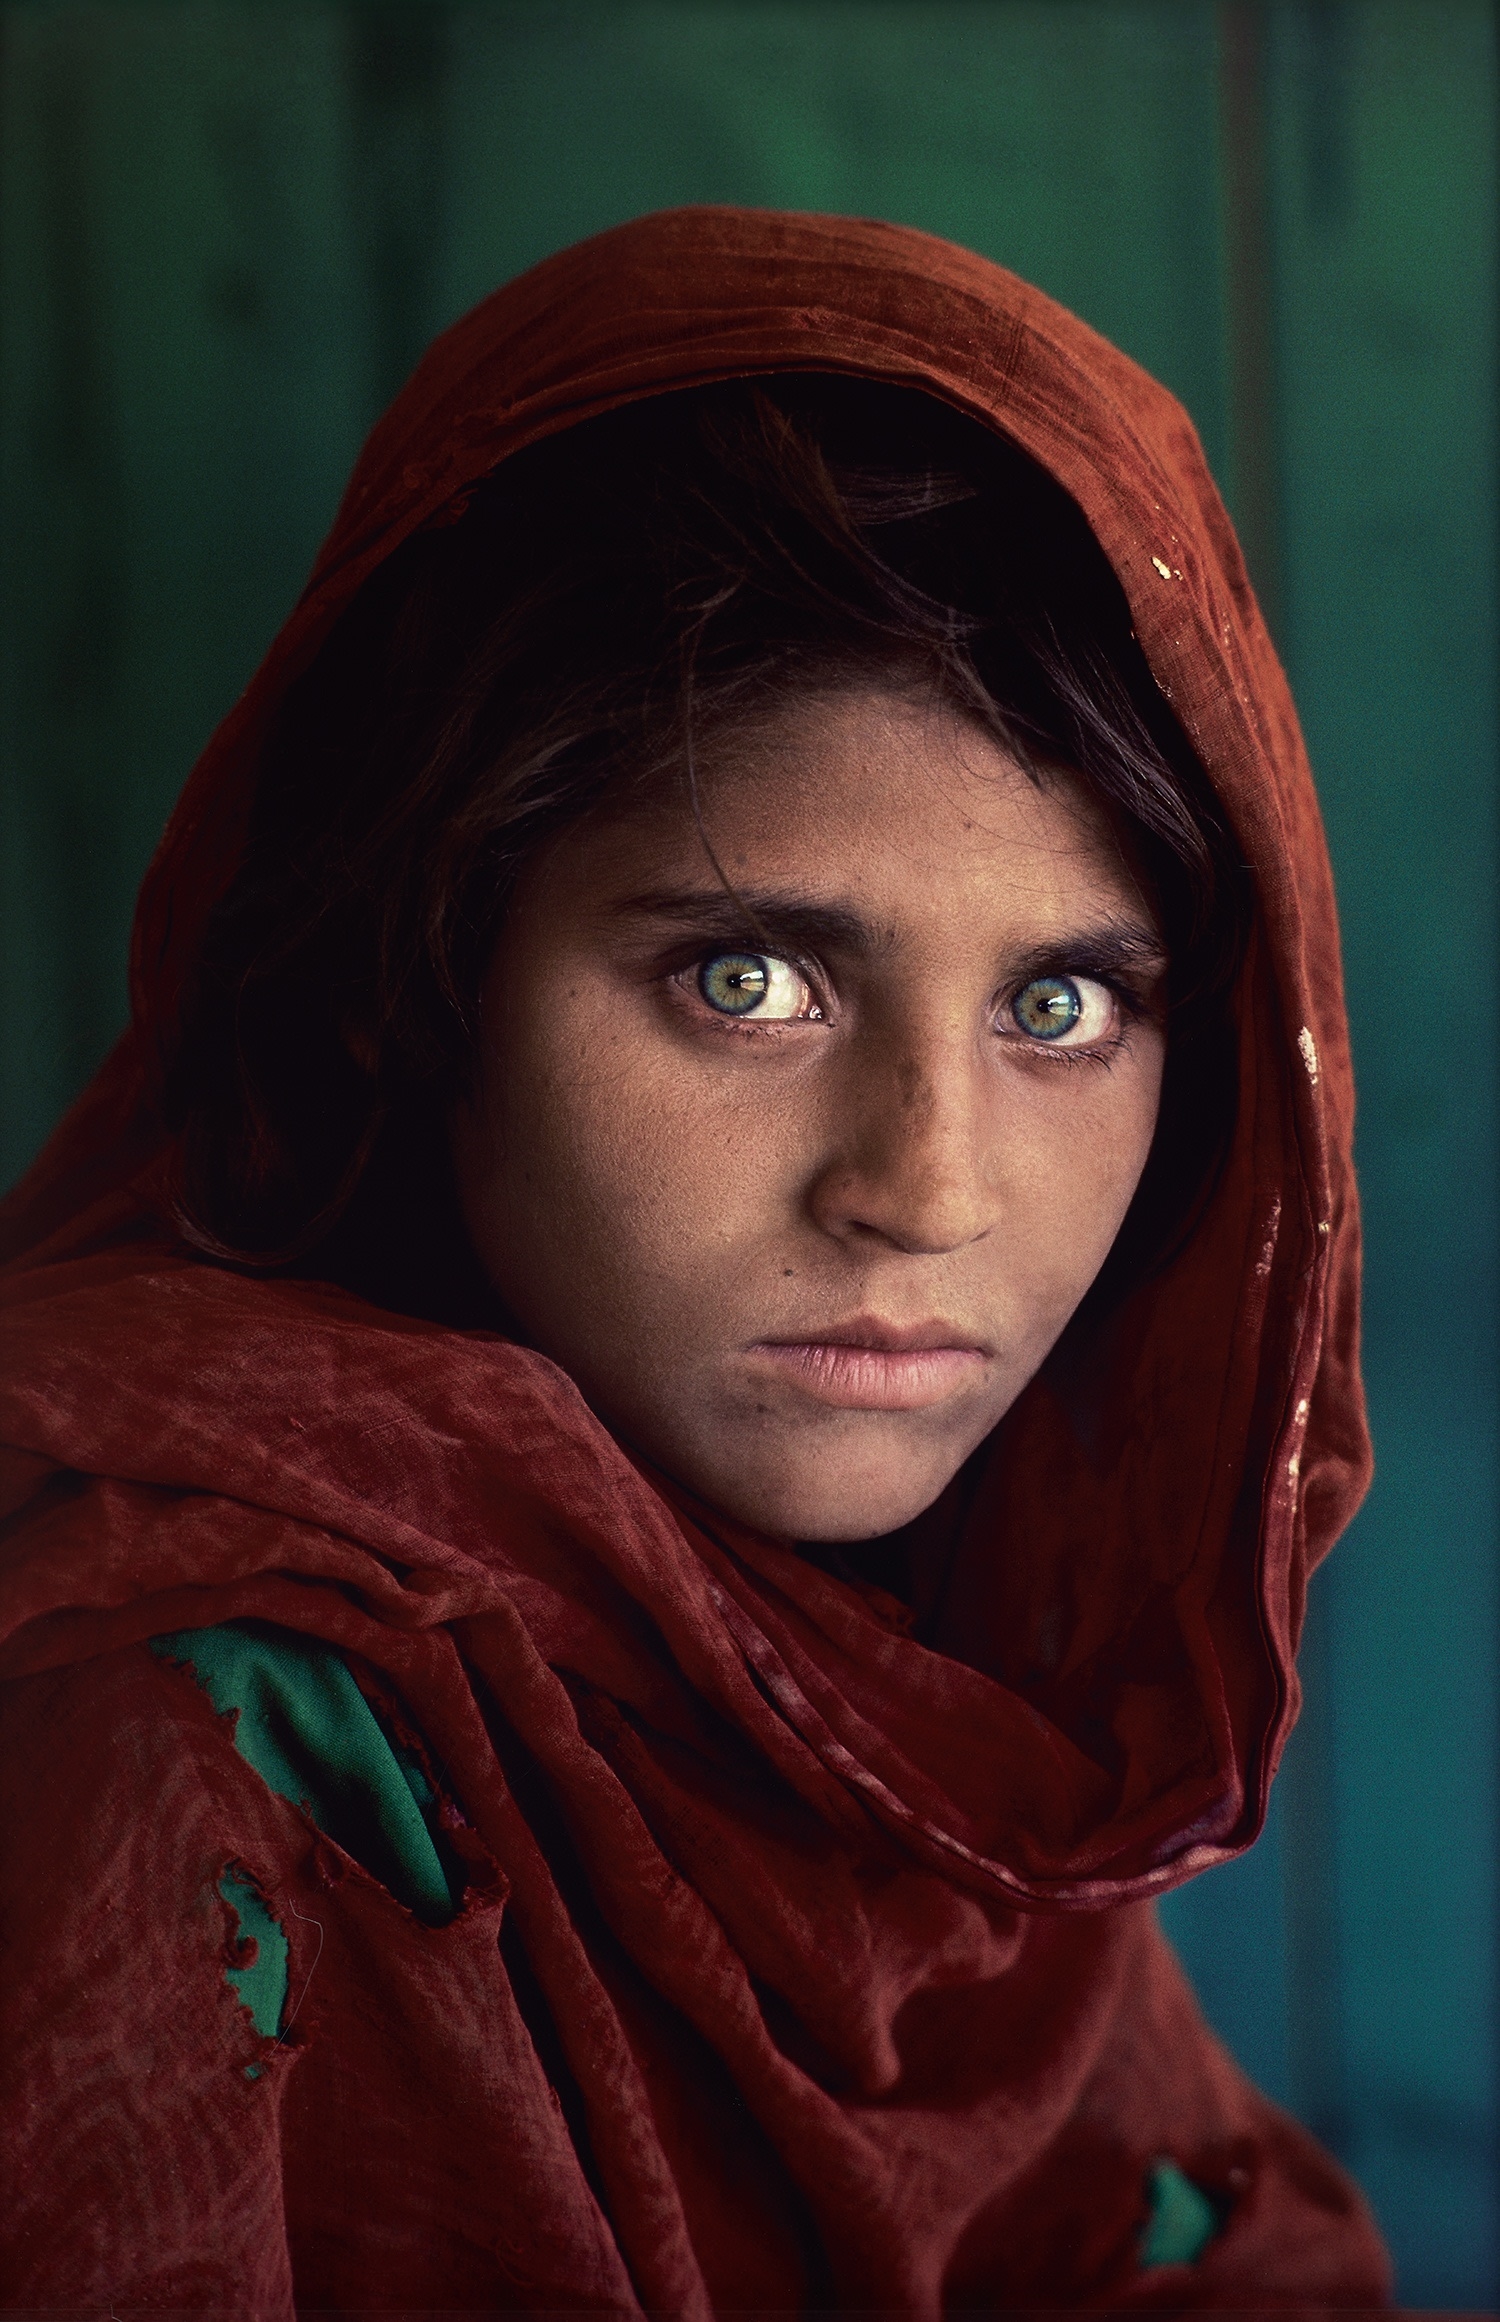 Sharbat Gula, Afghan Girl, Pakistan - Steve McCurry